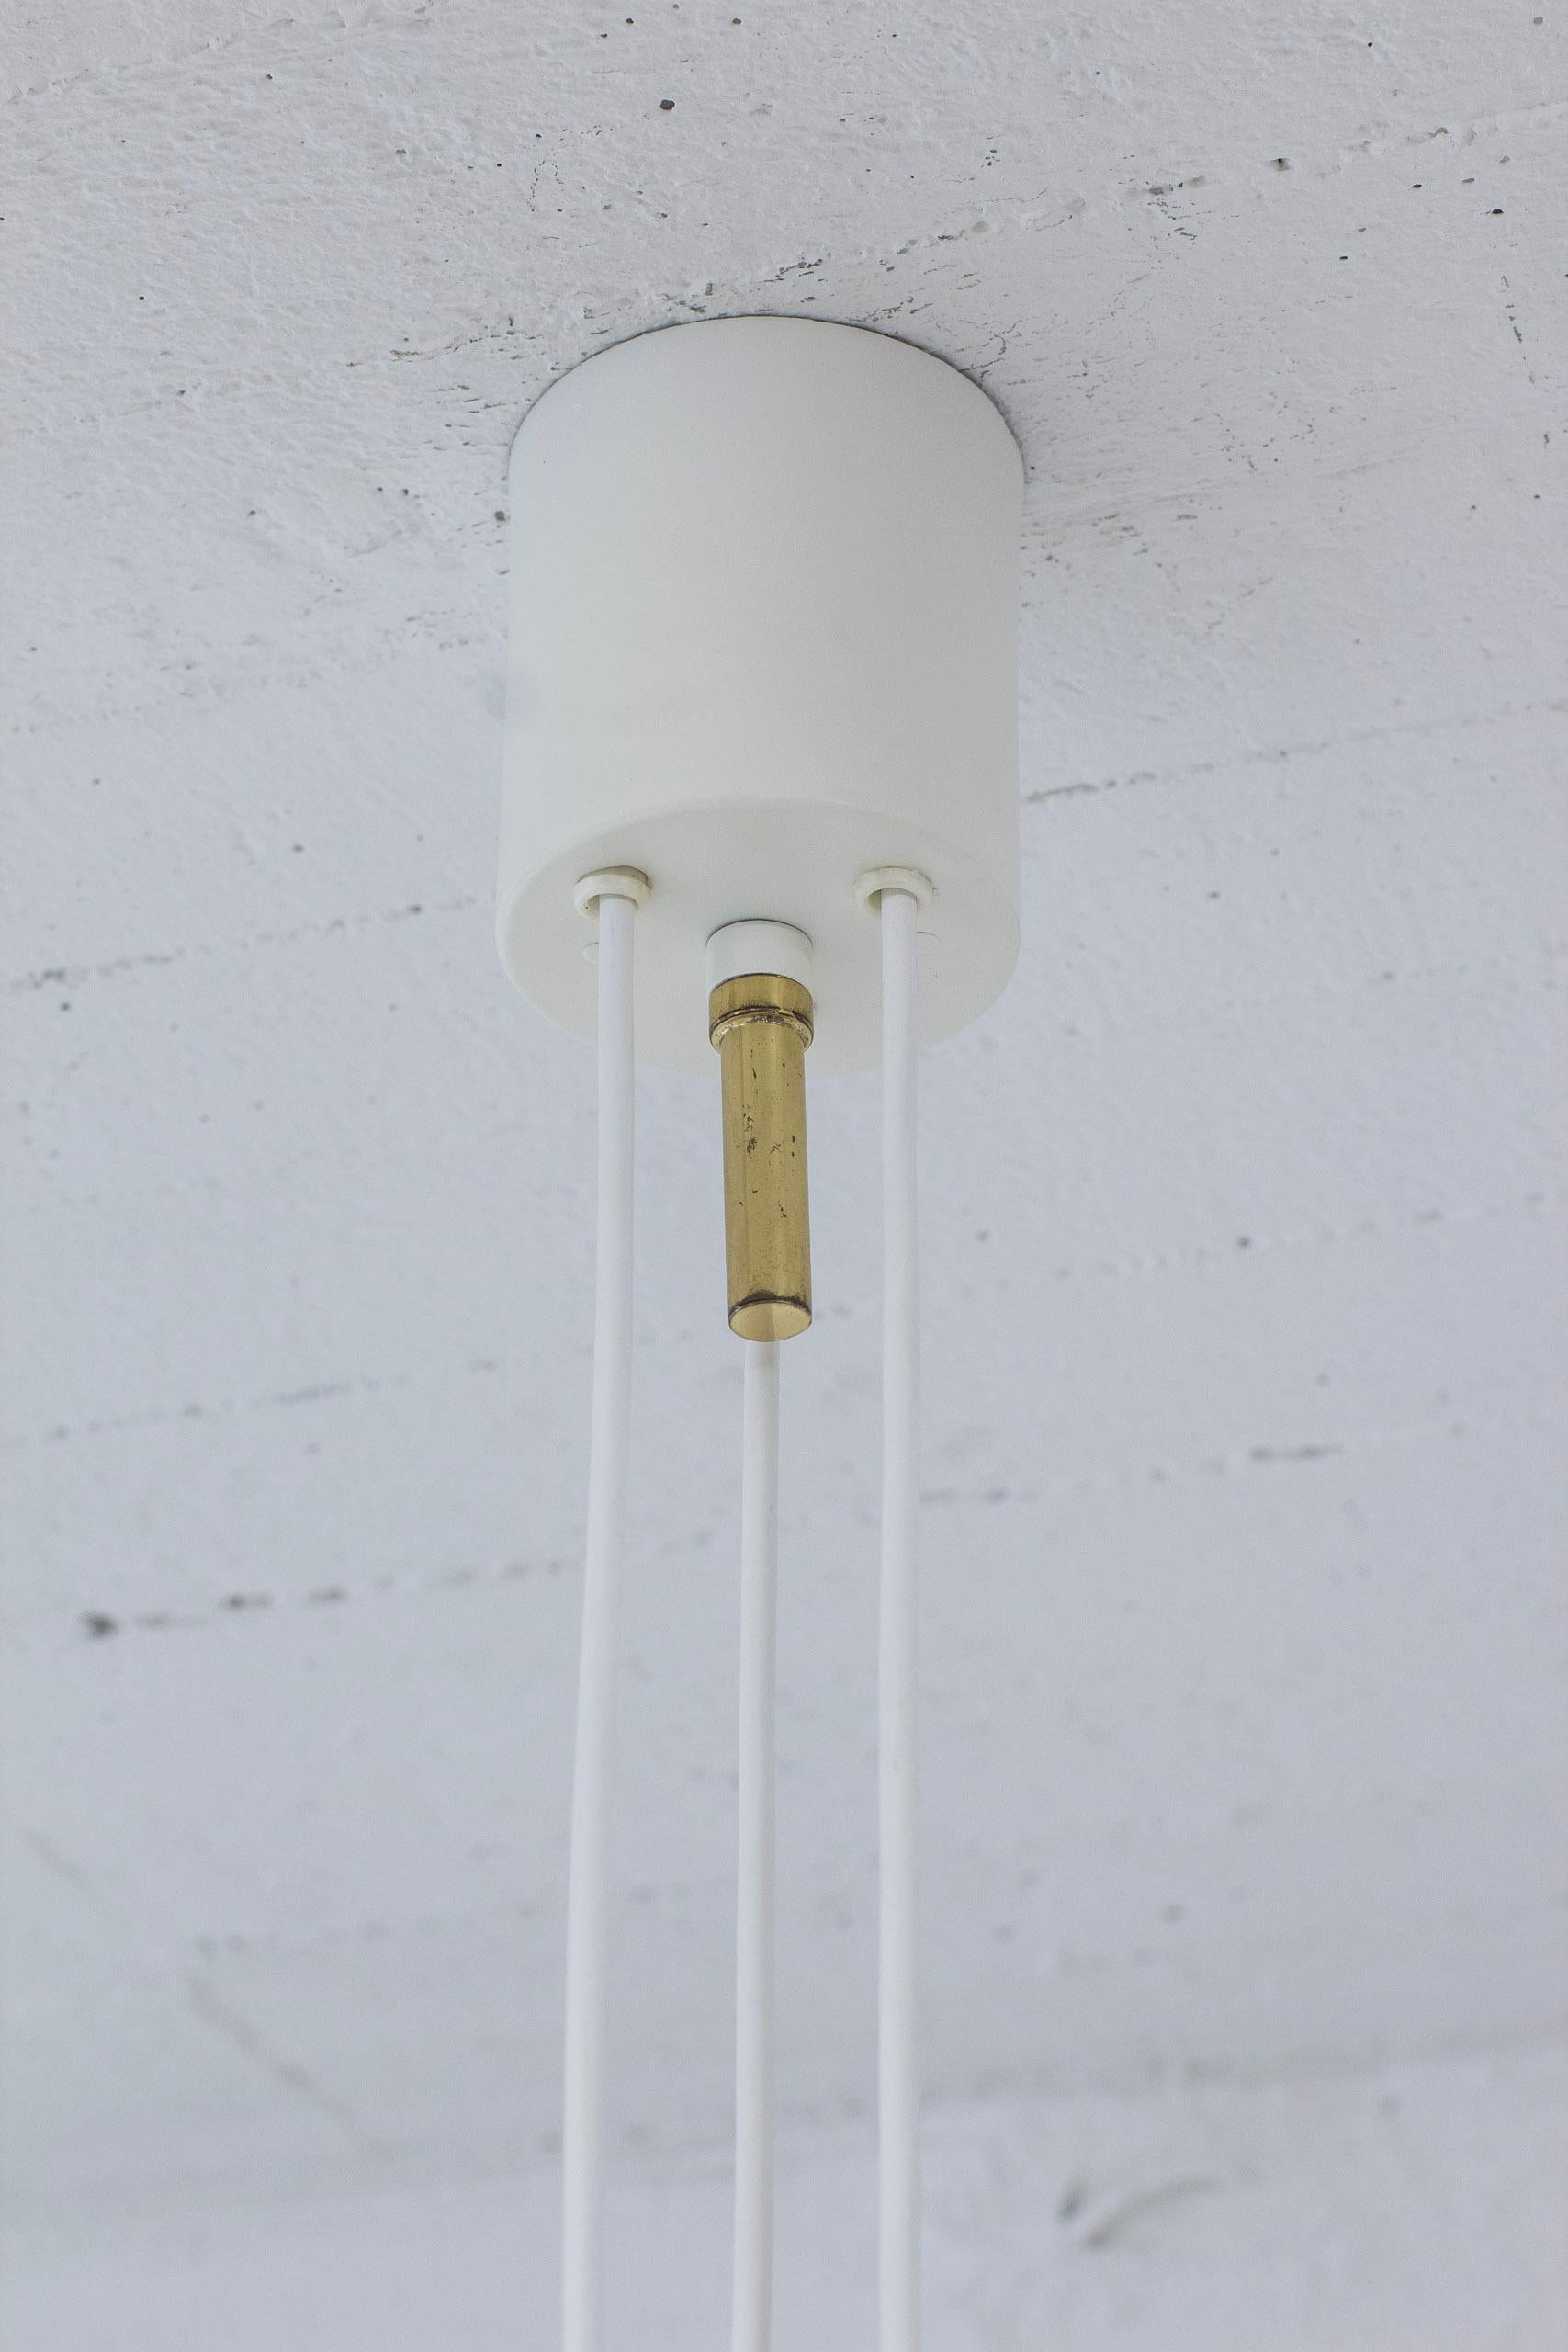 Scandinavian Modern Pendant Lamps Attributed to Hans-Agne Jakobsson, Karlskron Lampfabrik, 1950s For Sale